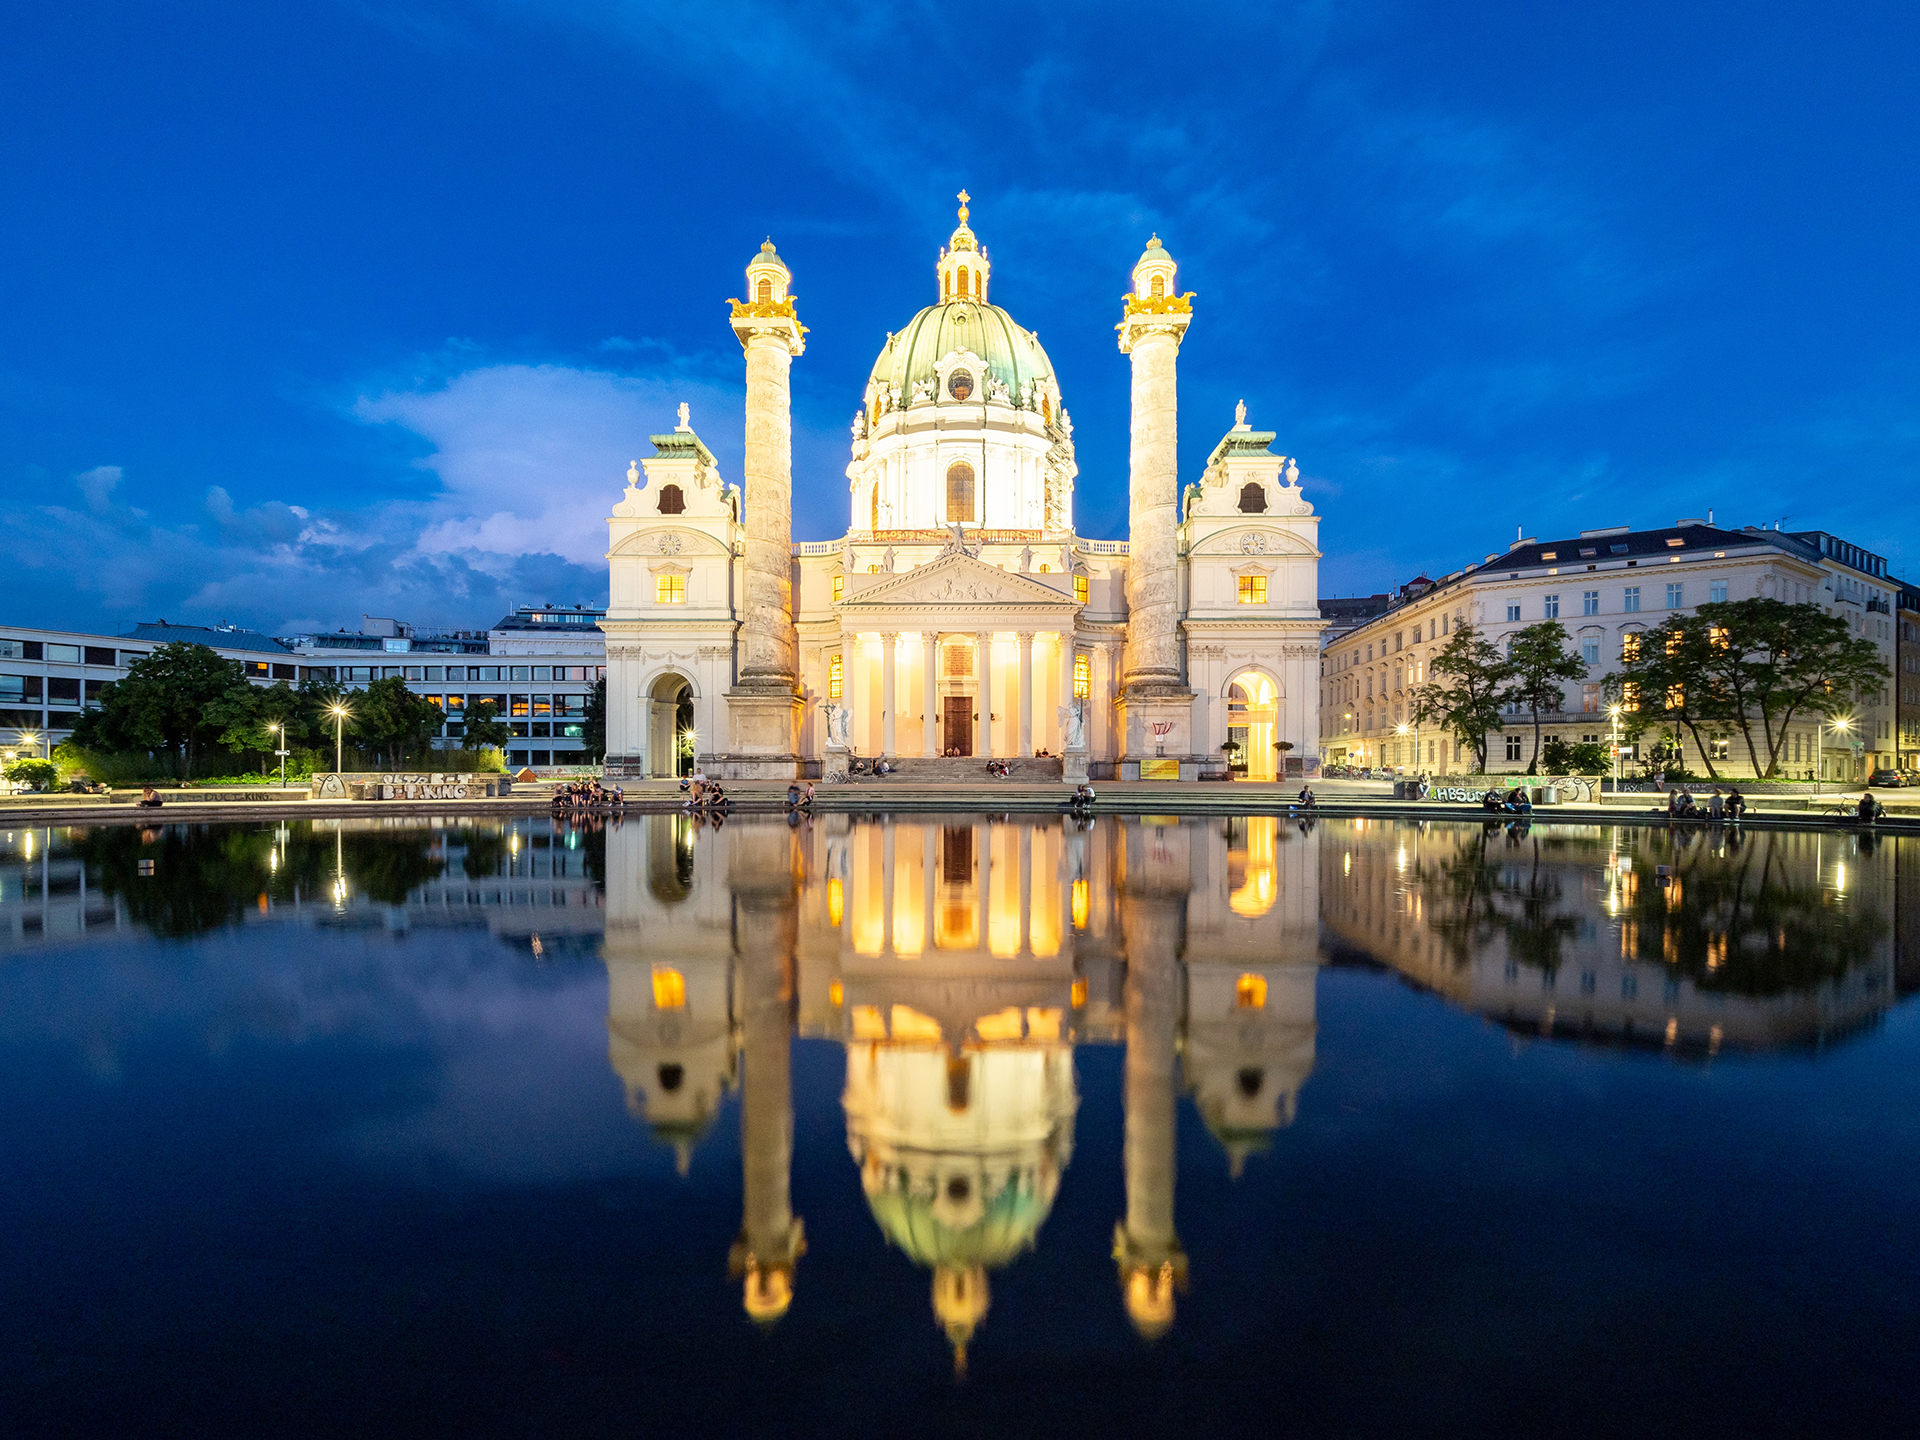 St. Charles Church in Vienna, Austria.